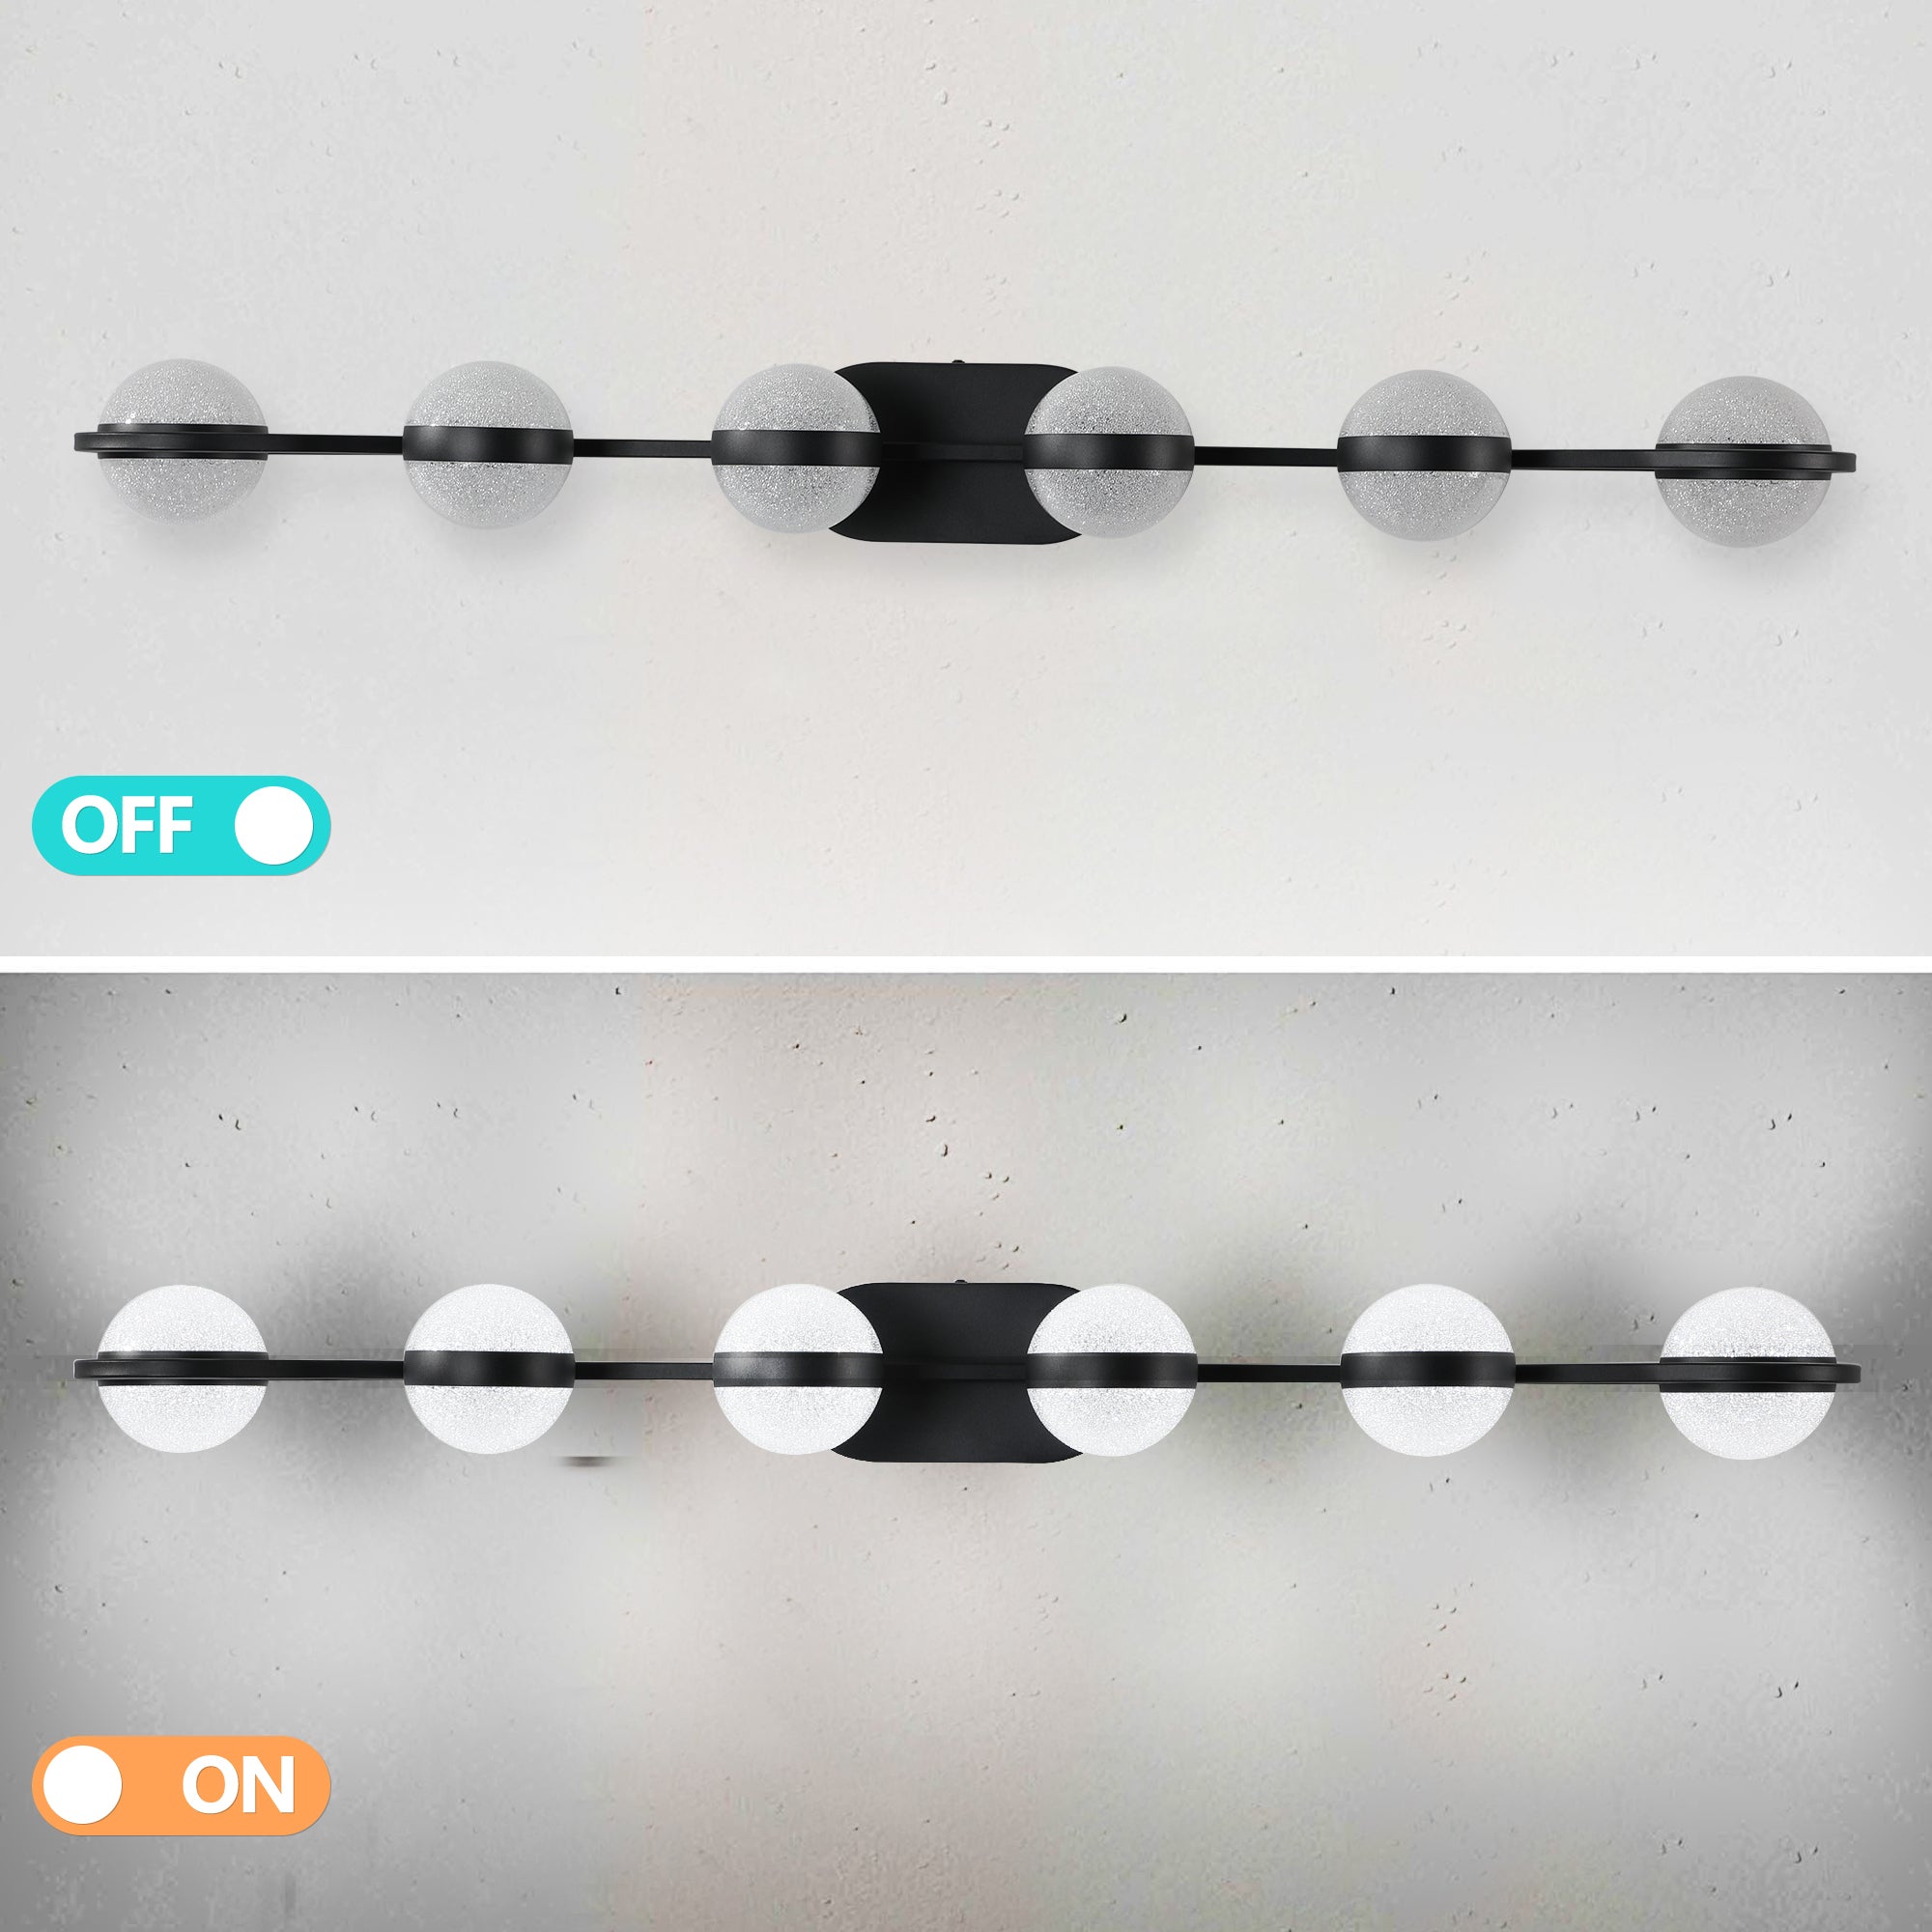 Vanity Lights With 6 LED Bulbs For Bathroom Lighting - Black